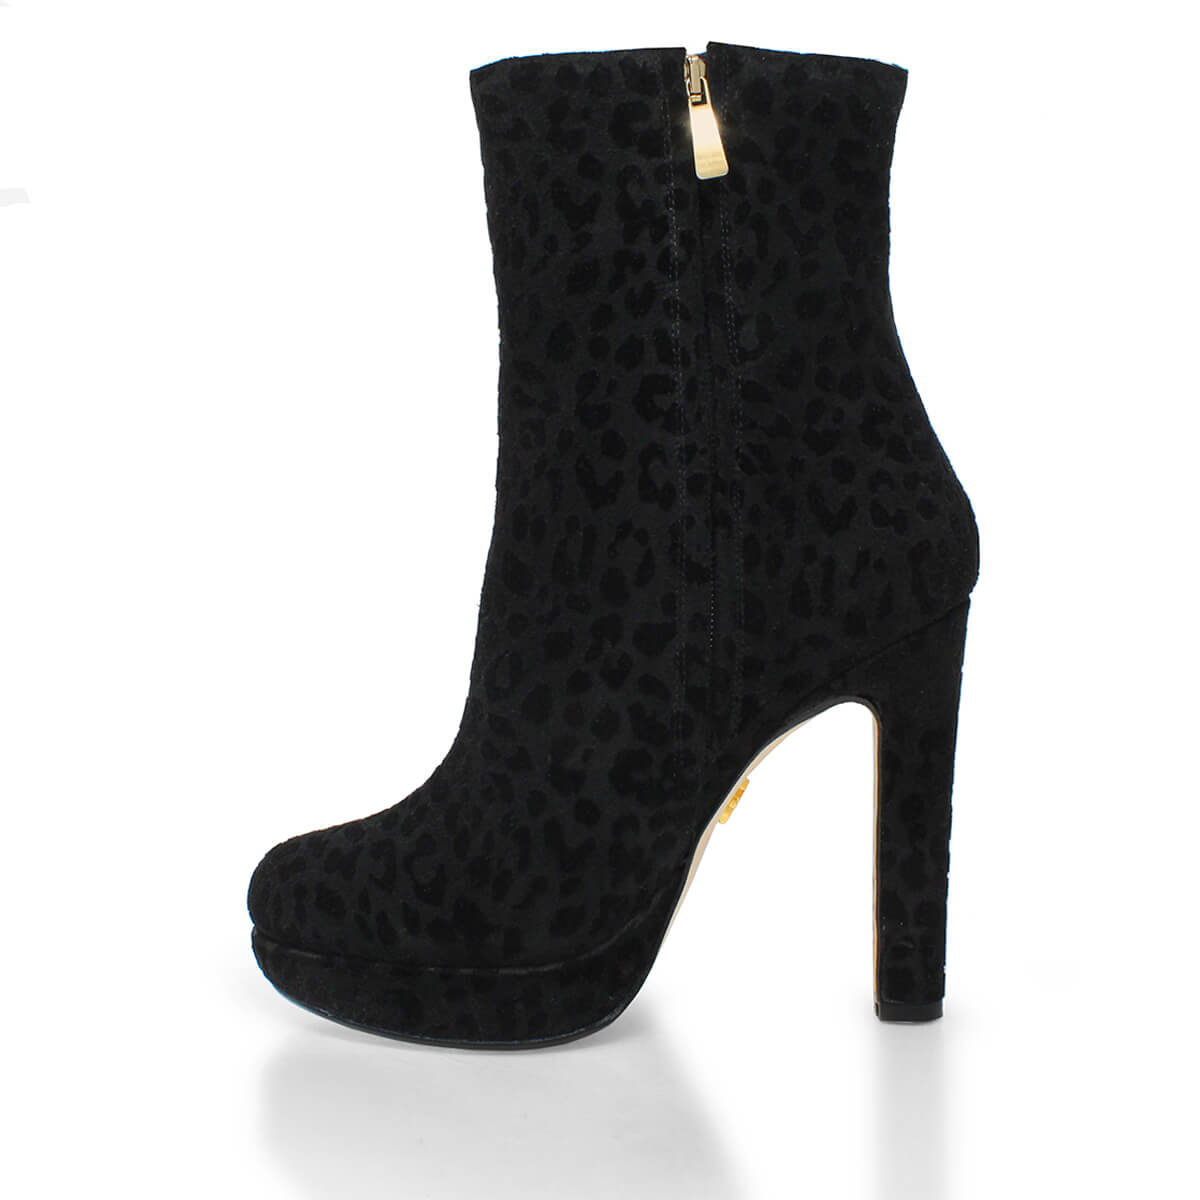 ALIX 120 - Black Print Regina Romero High Heel Platform Ankle Boot Shoe for Women in Leather